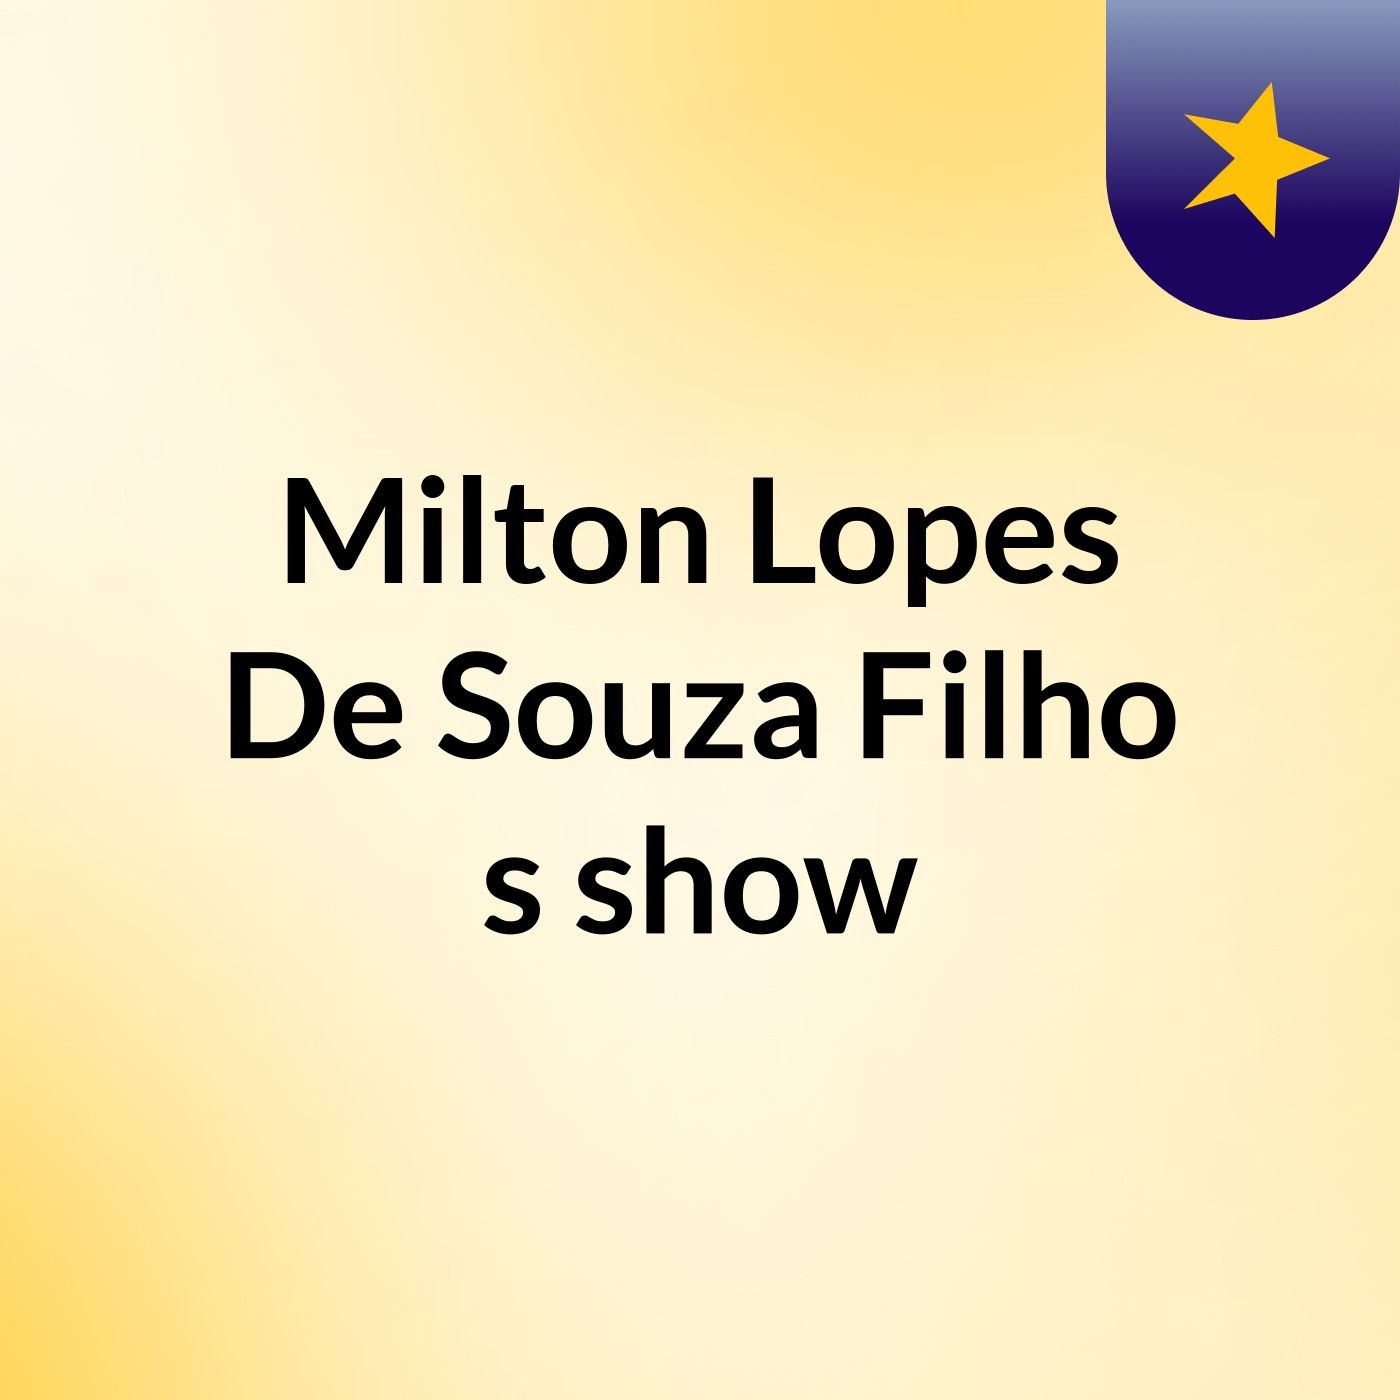 Milton Lopes De Souza Filho's show